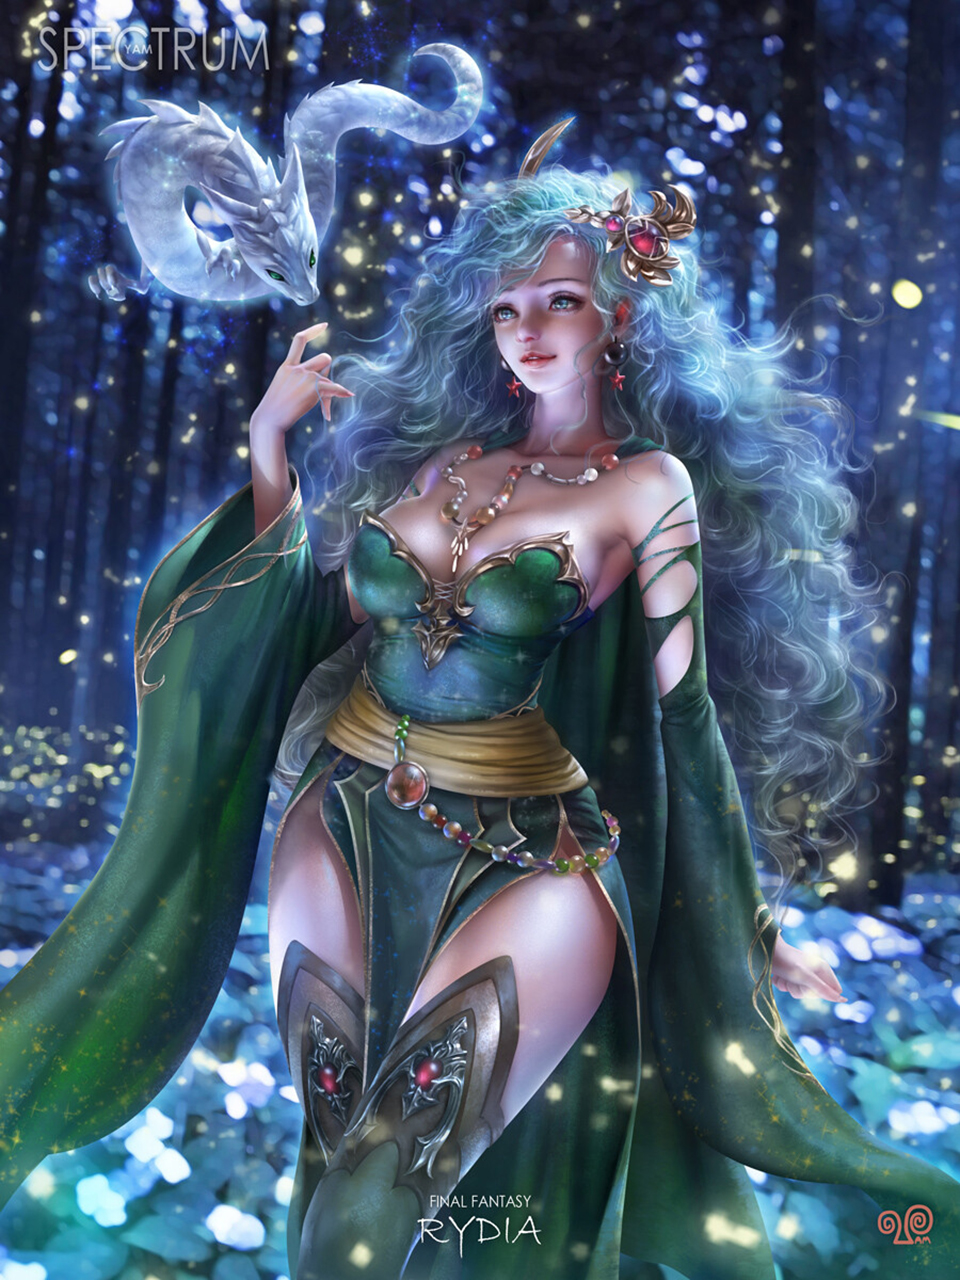 General 960x1280 Mansik Yang drawing Final Fantasy women Rydia blue hair long hair hair accessories curly hair dress green clothing serpent magic fantasy art jewelry gems